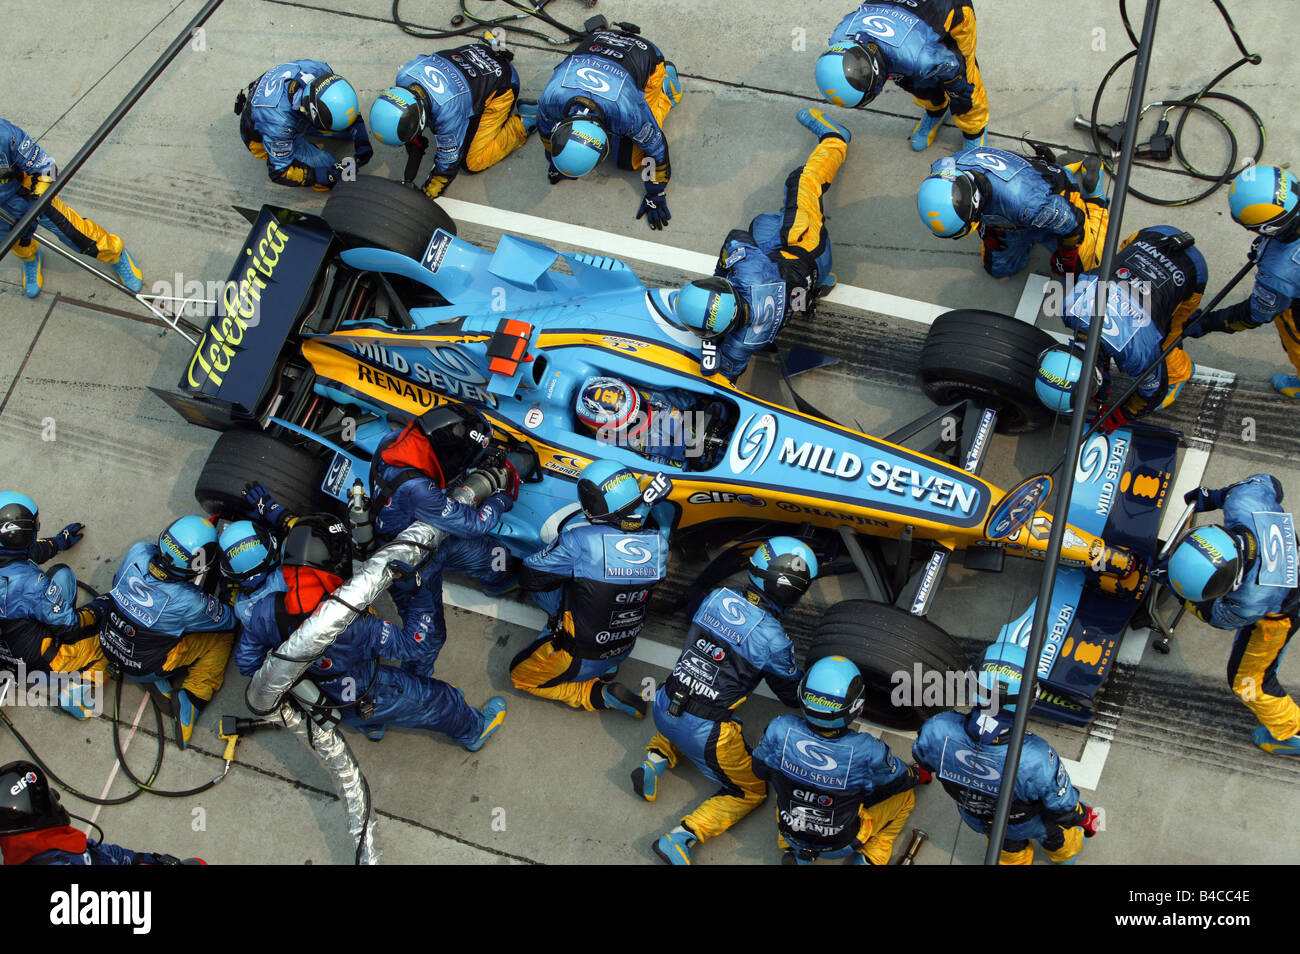 engine sport, Renault, Formel 1 2005, pit stop, Malaysia, photographer: Daniel Reinhard Stock Photo